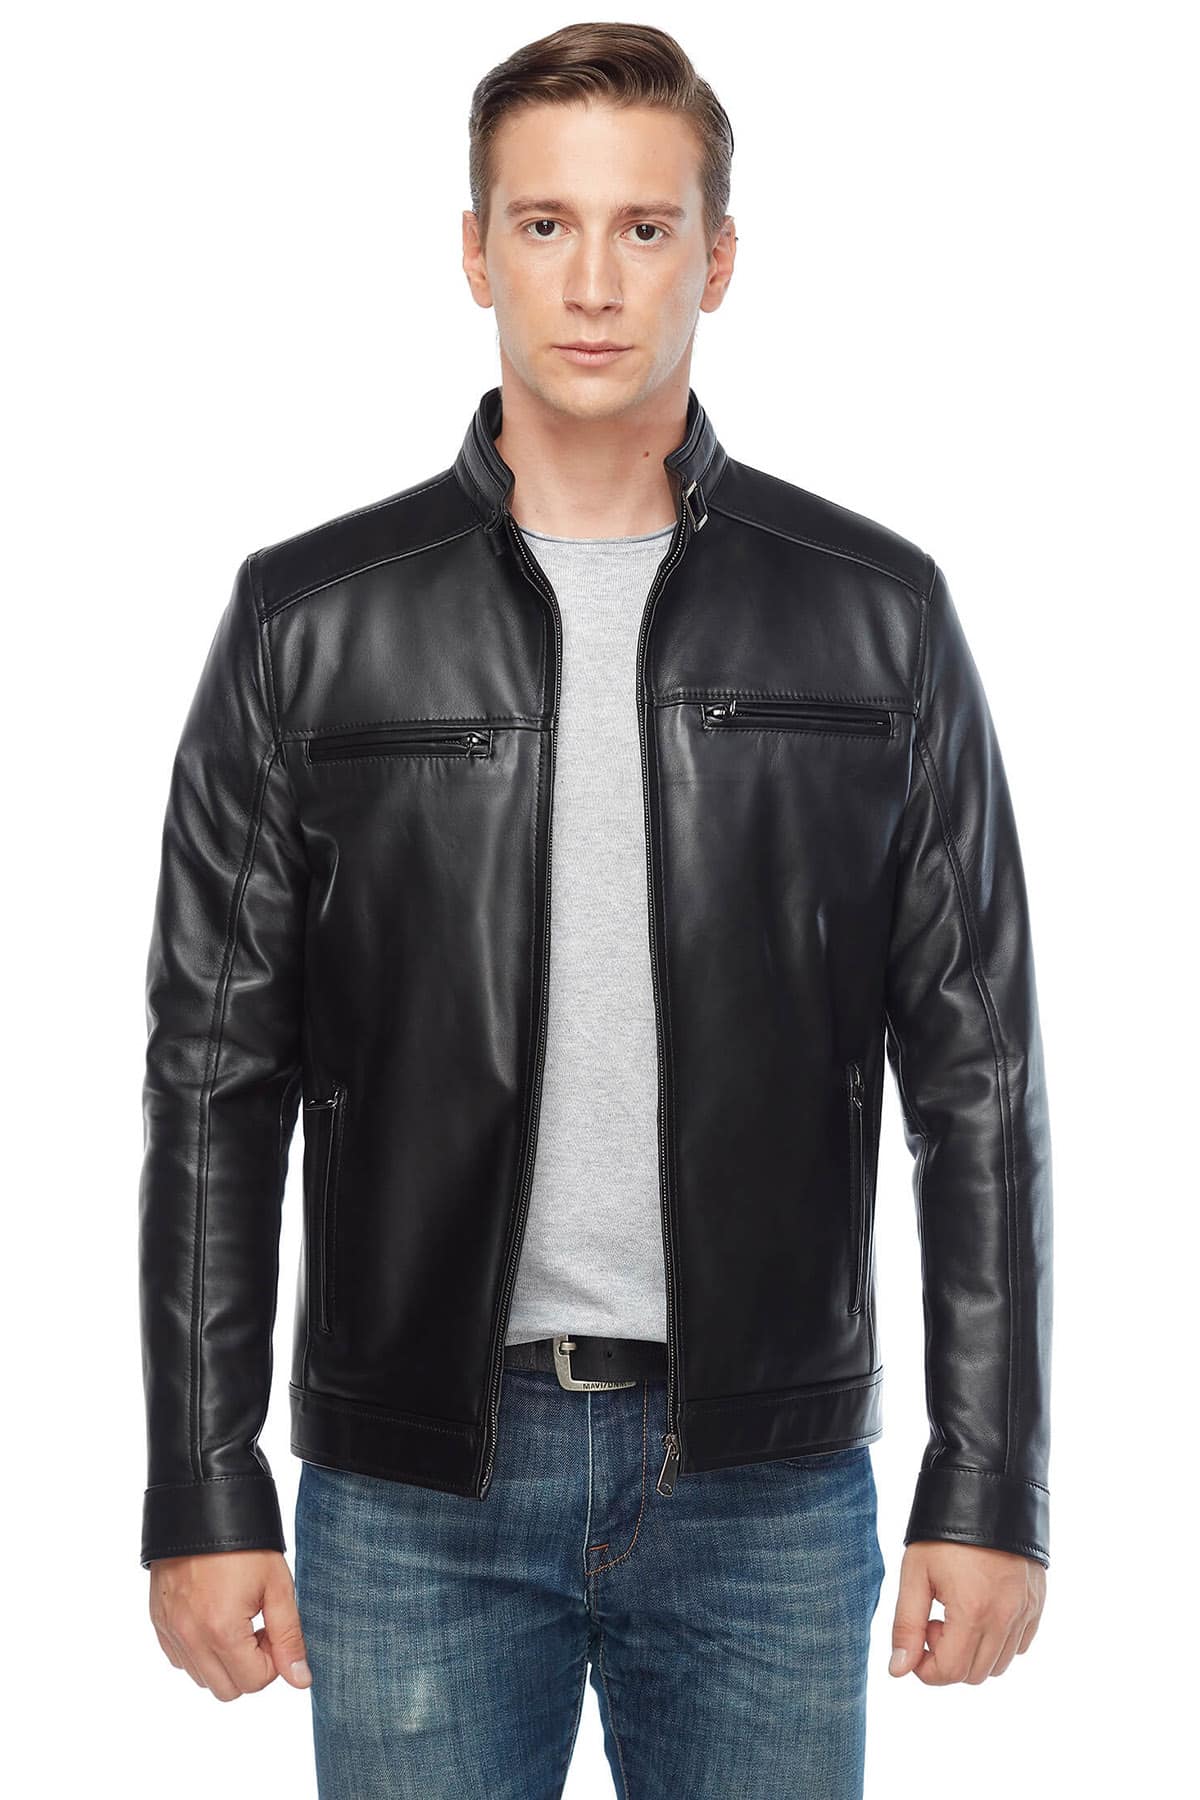 Craig McGinlay Genuine Leather Jacket in Black